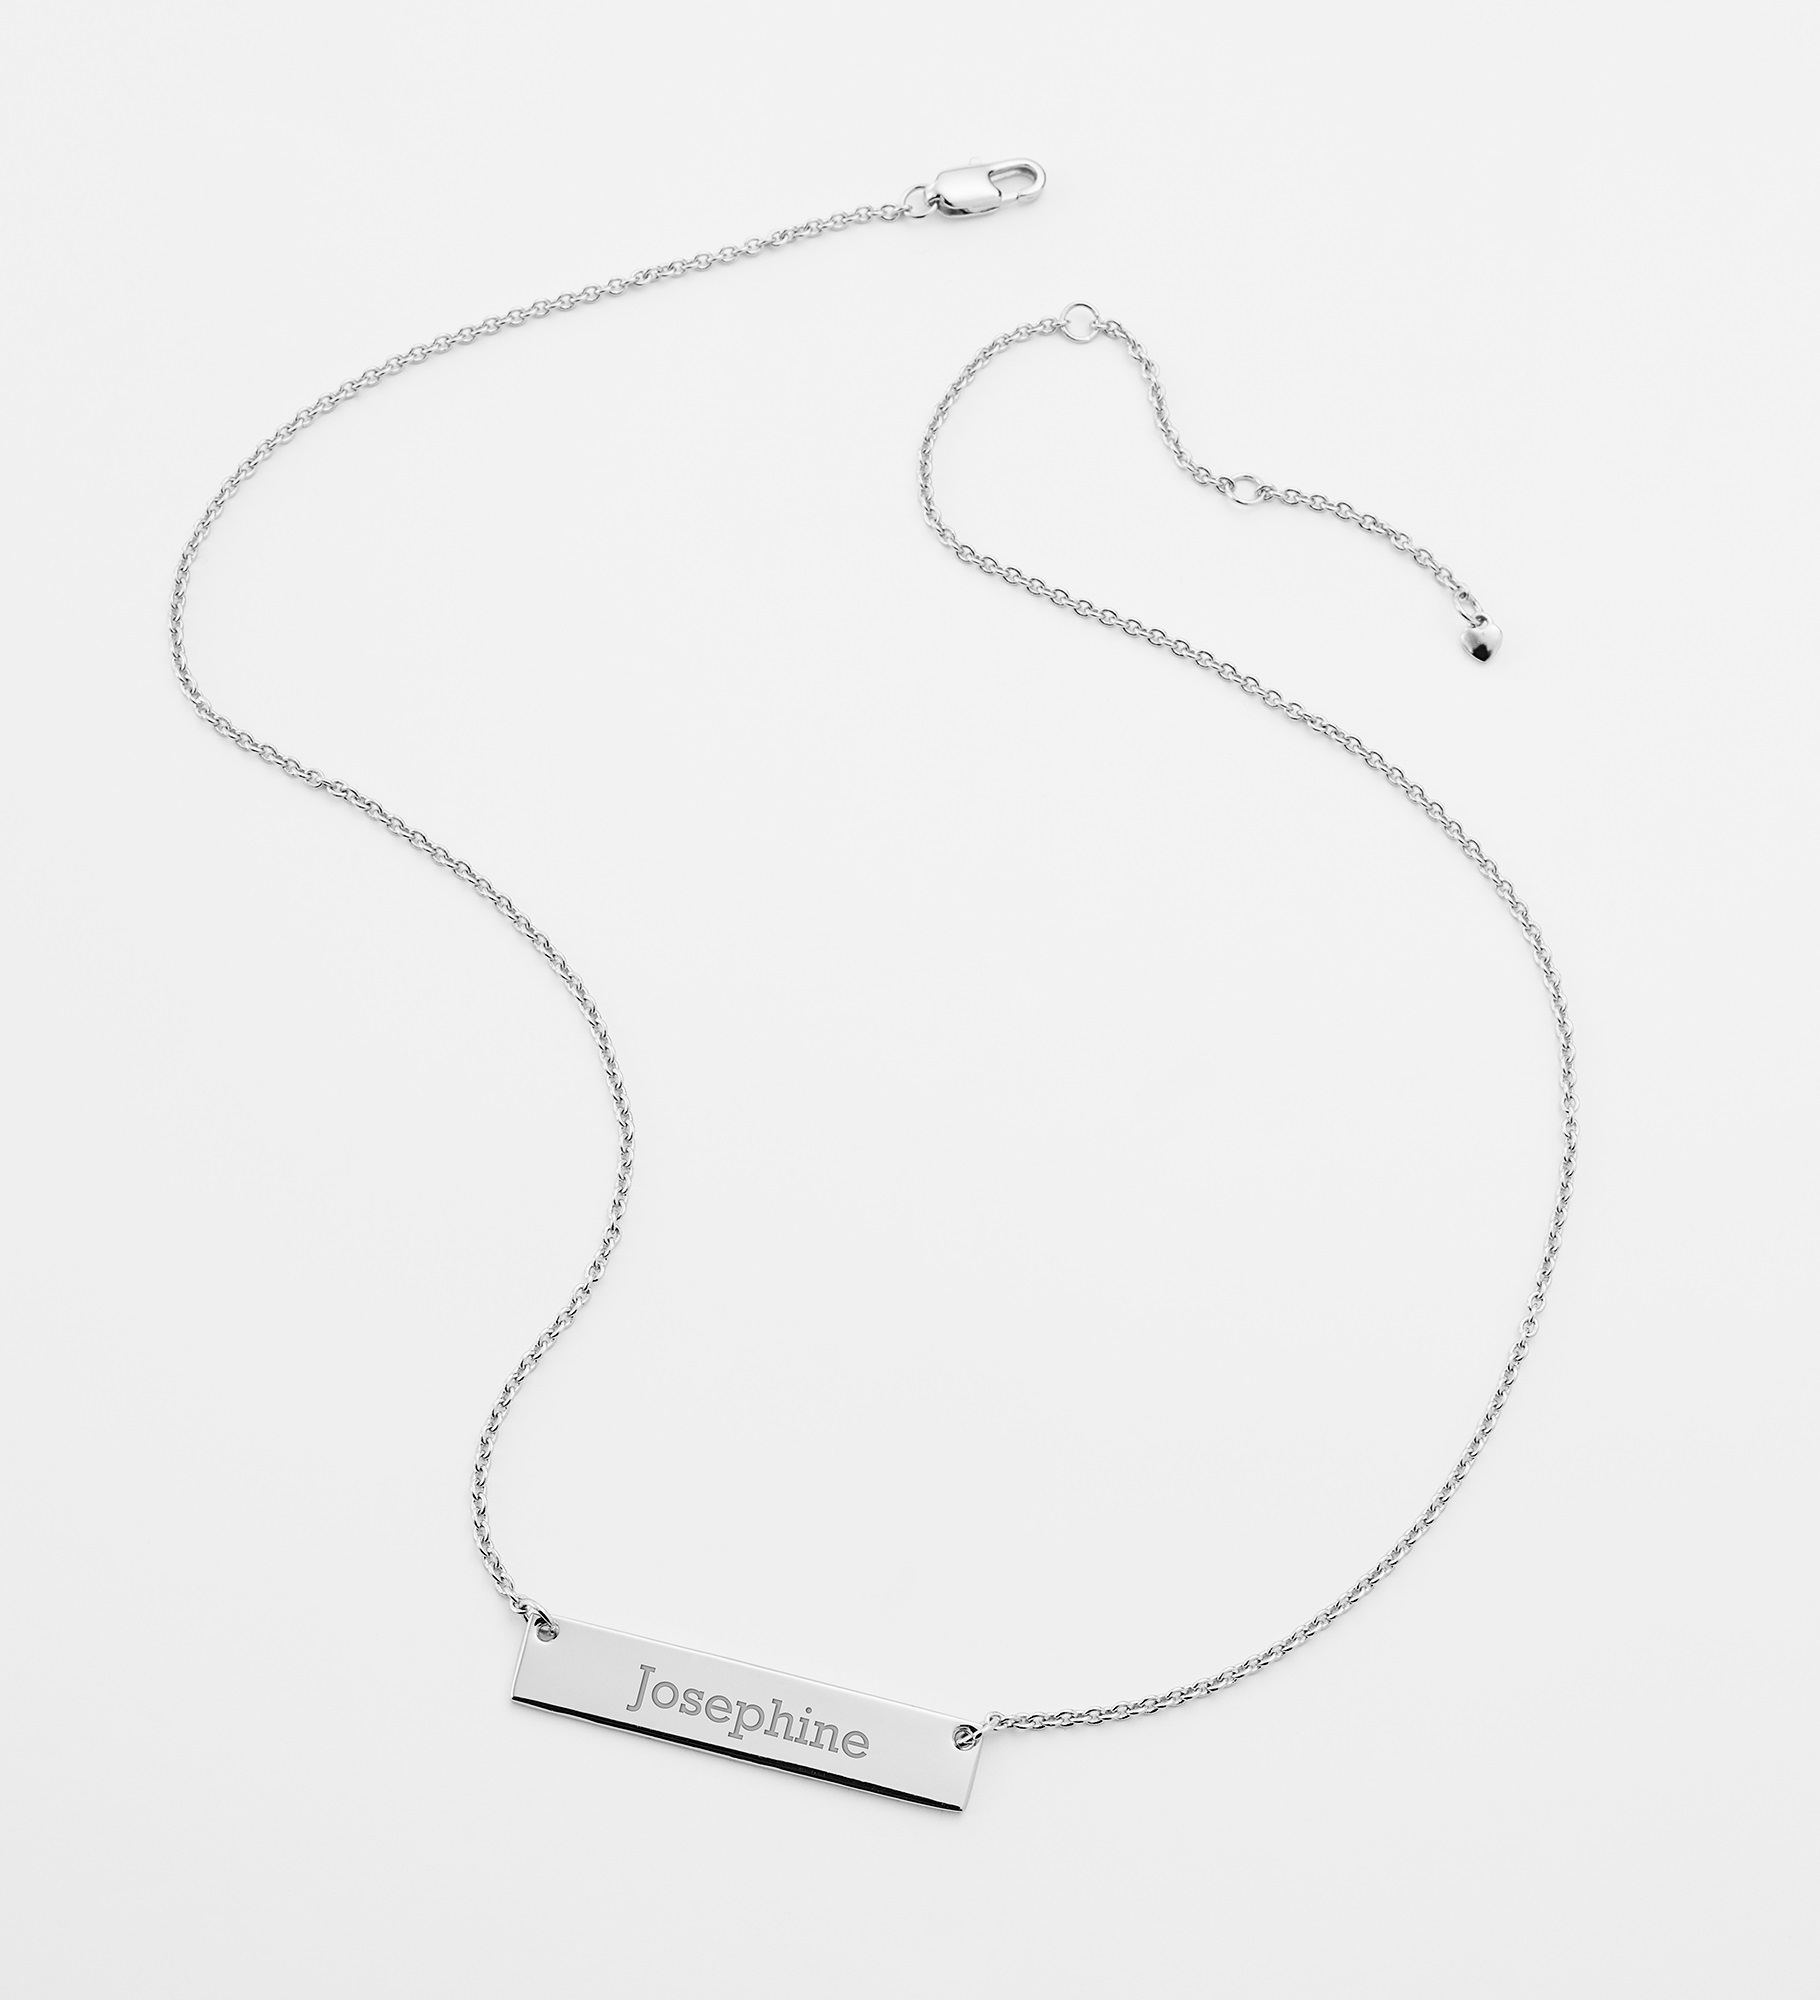  Engraved Silver Bar Necklace